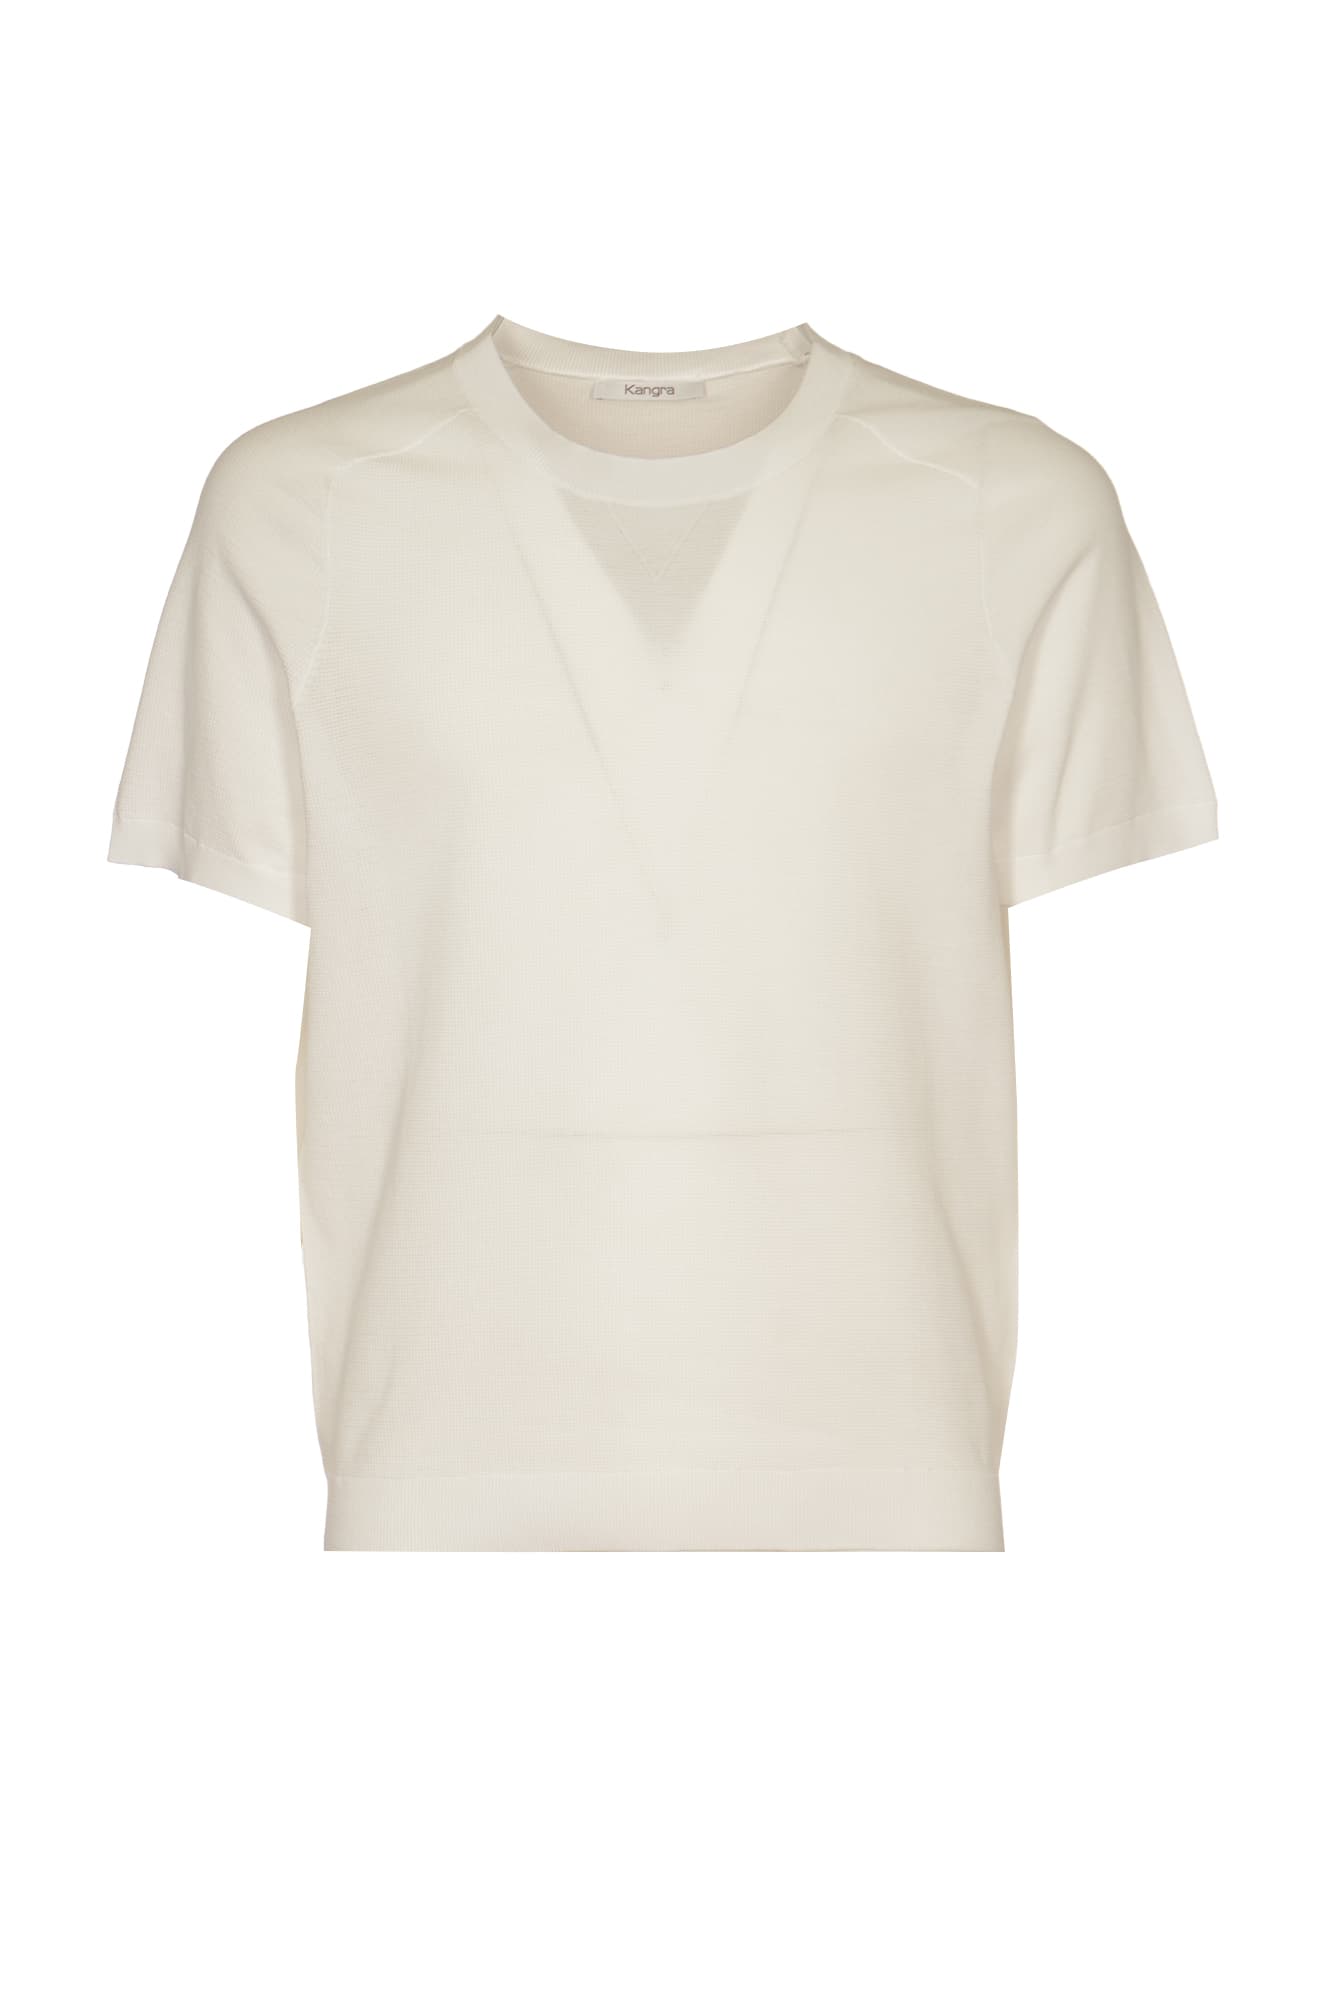 Kangra Round Neck T-shirt In White